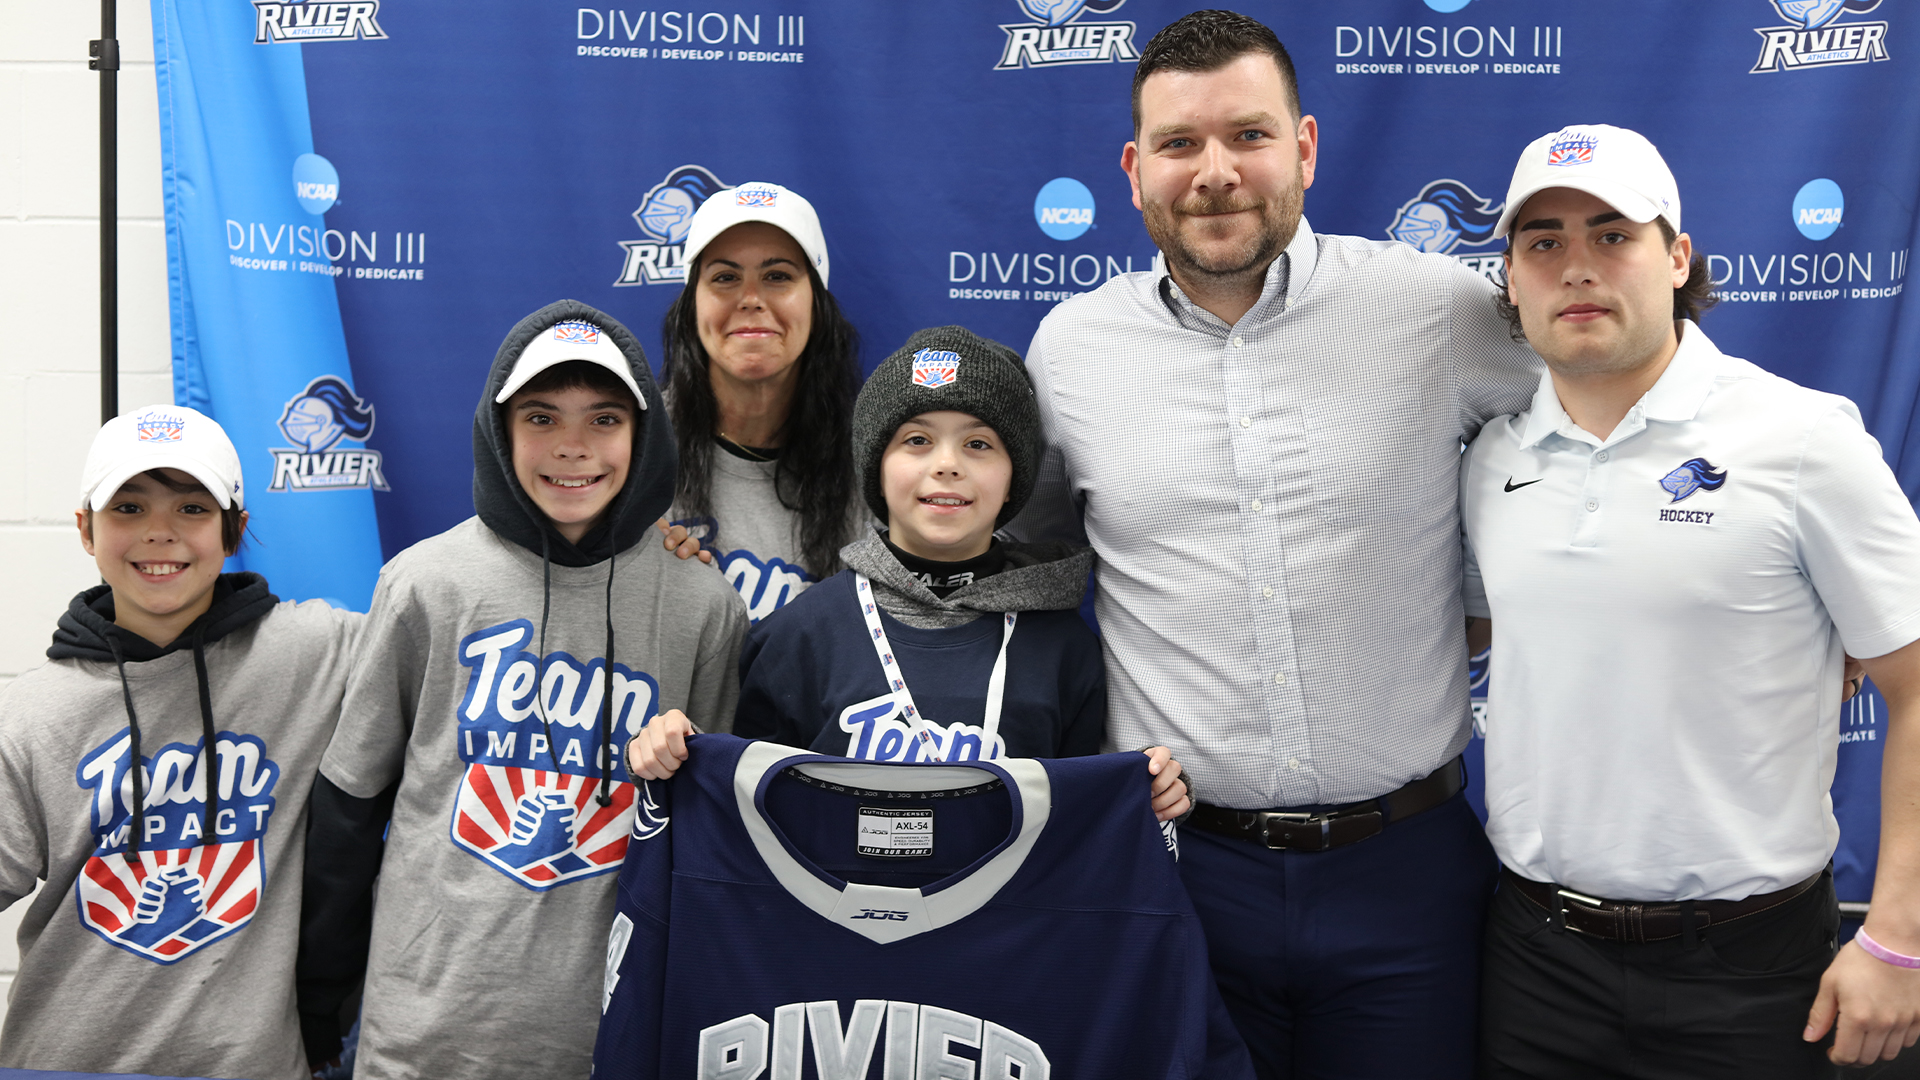 Rivier Men's Ice Hockey Signs Brayden Potorski through Team IMPACT